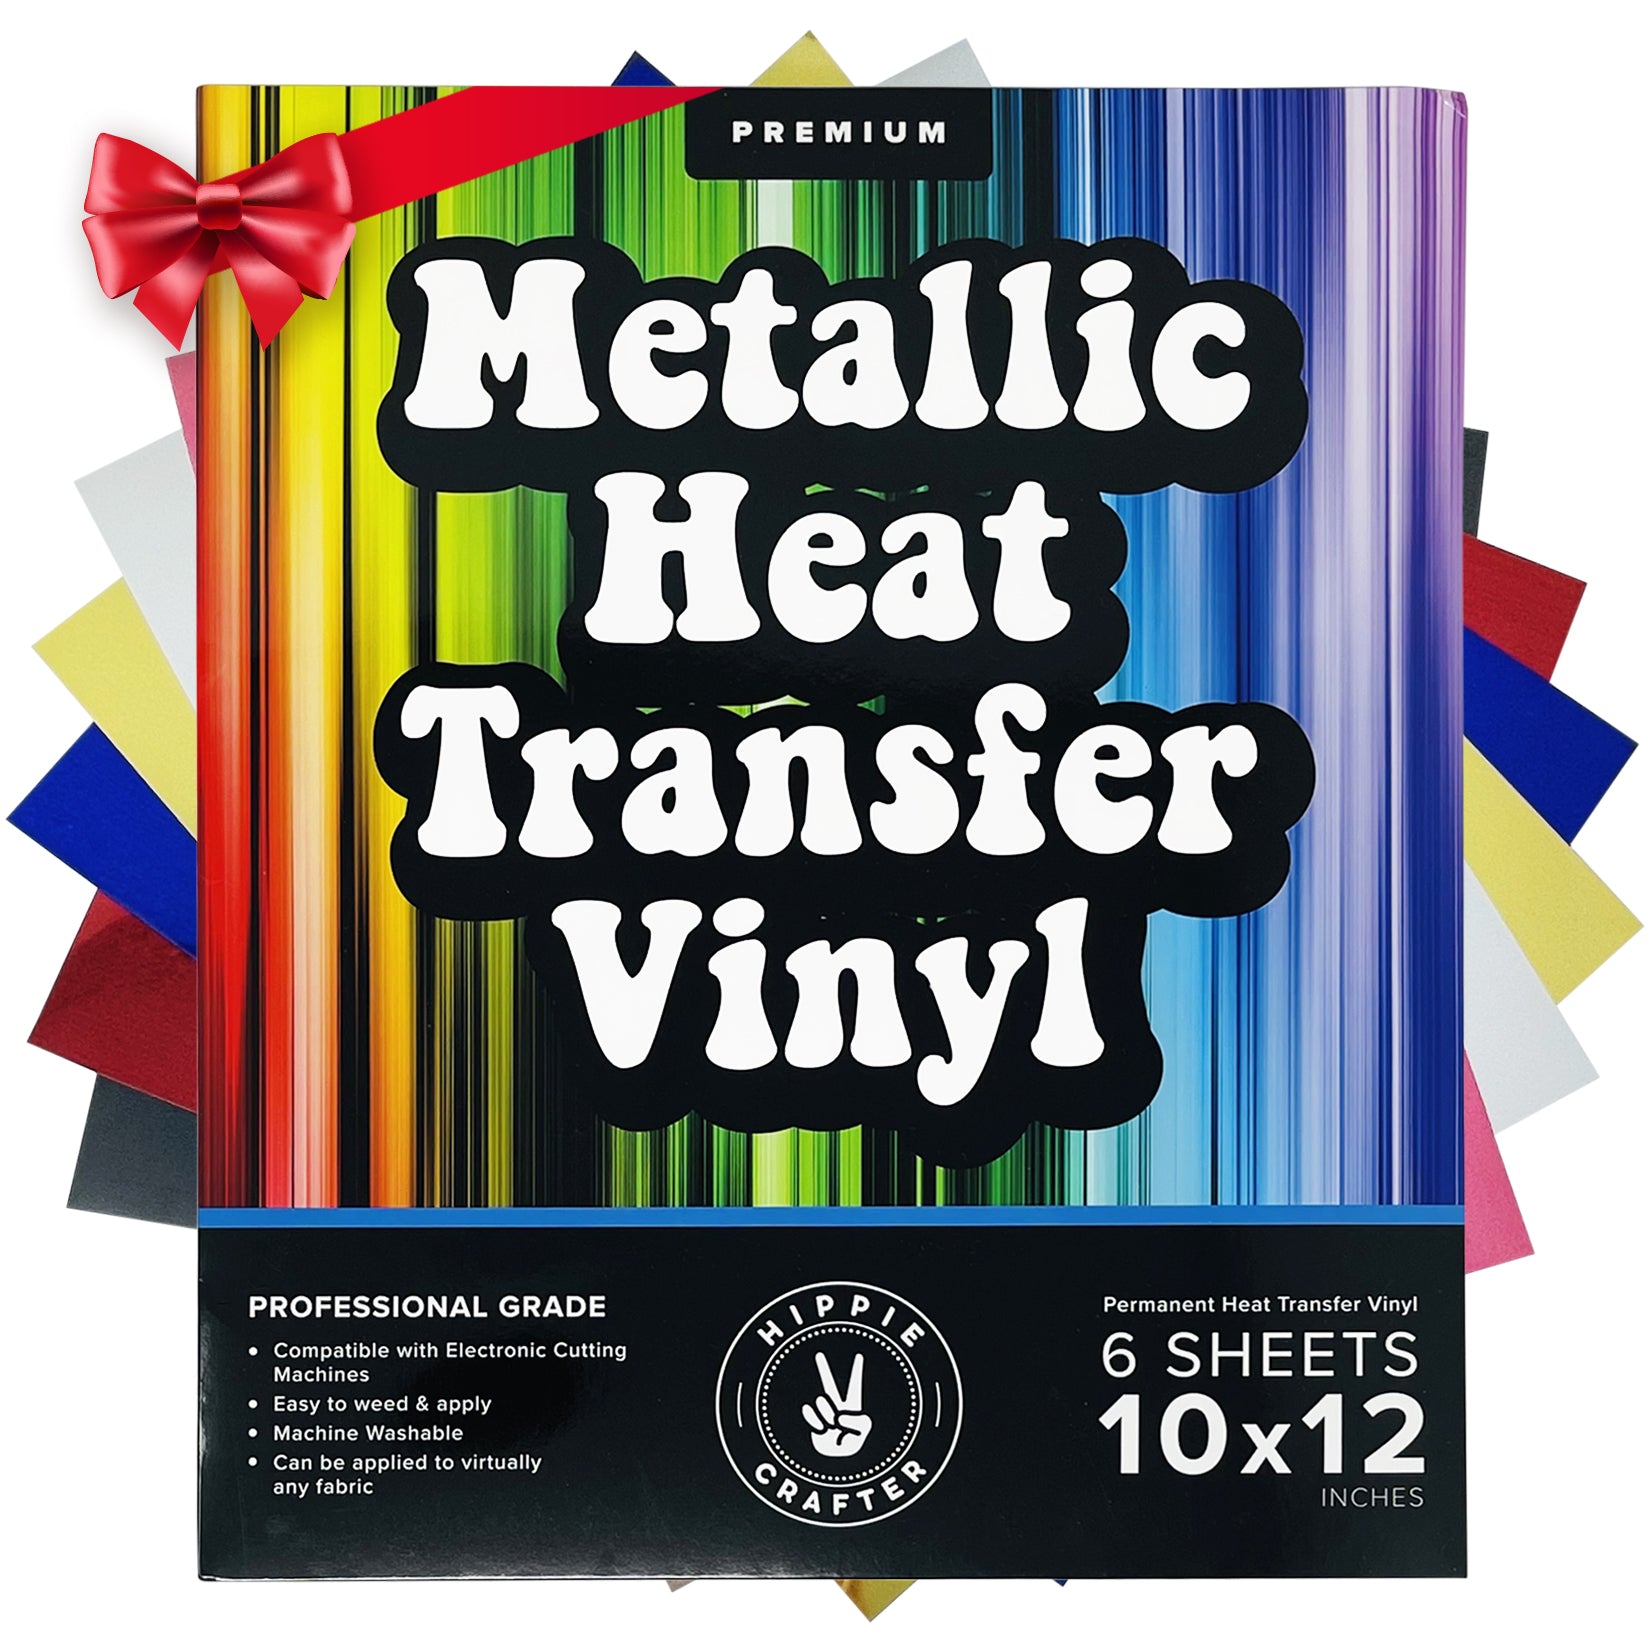 Metallic Vinyl Heat Transfer Vinyl Gold Vinyl Sheets Pink Chrome